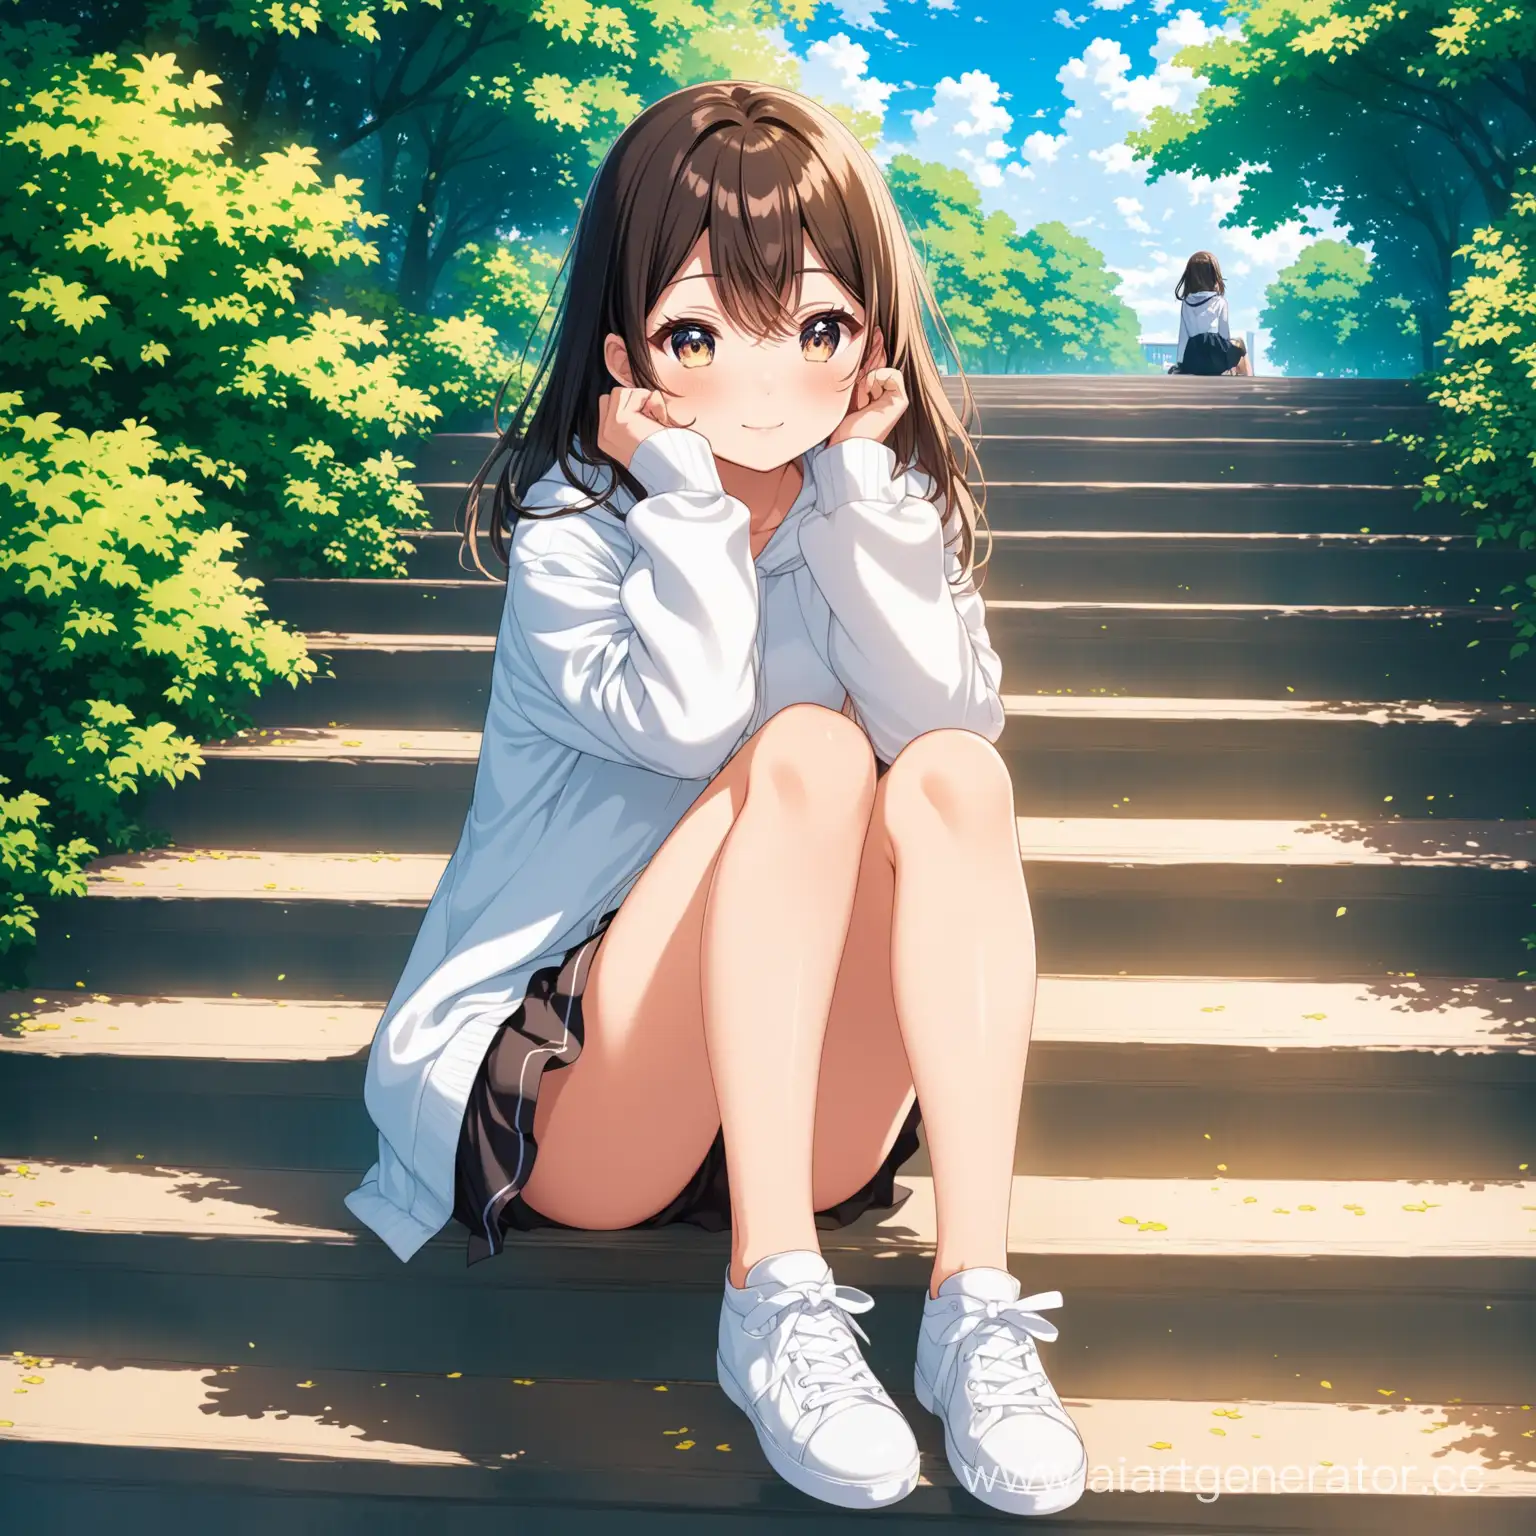 Anime-Girl-Sitting-on-Stairs-in-Serene-Park-Setting